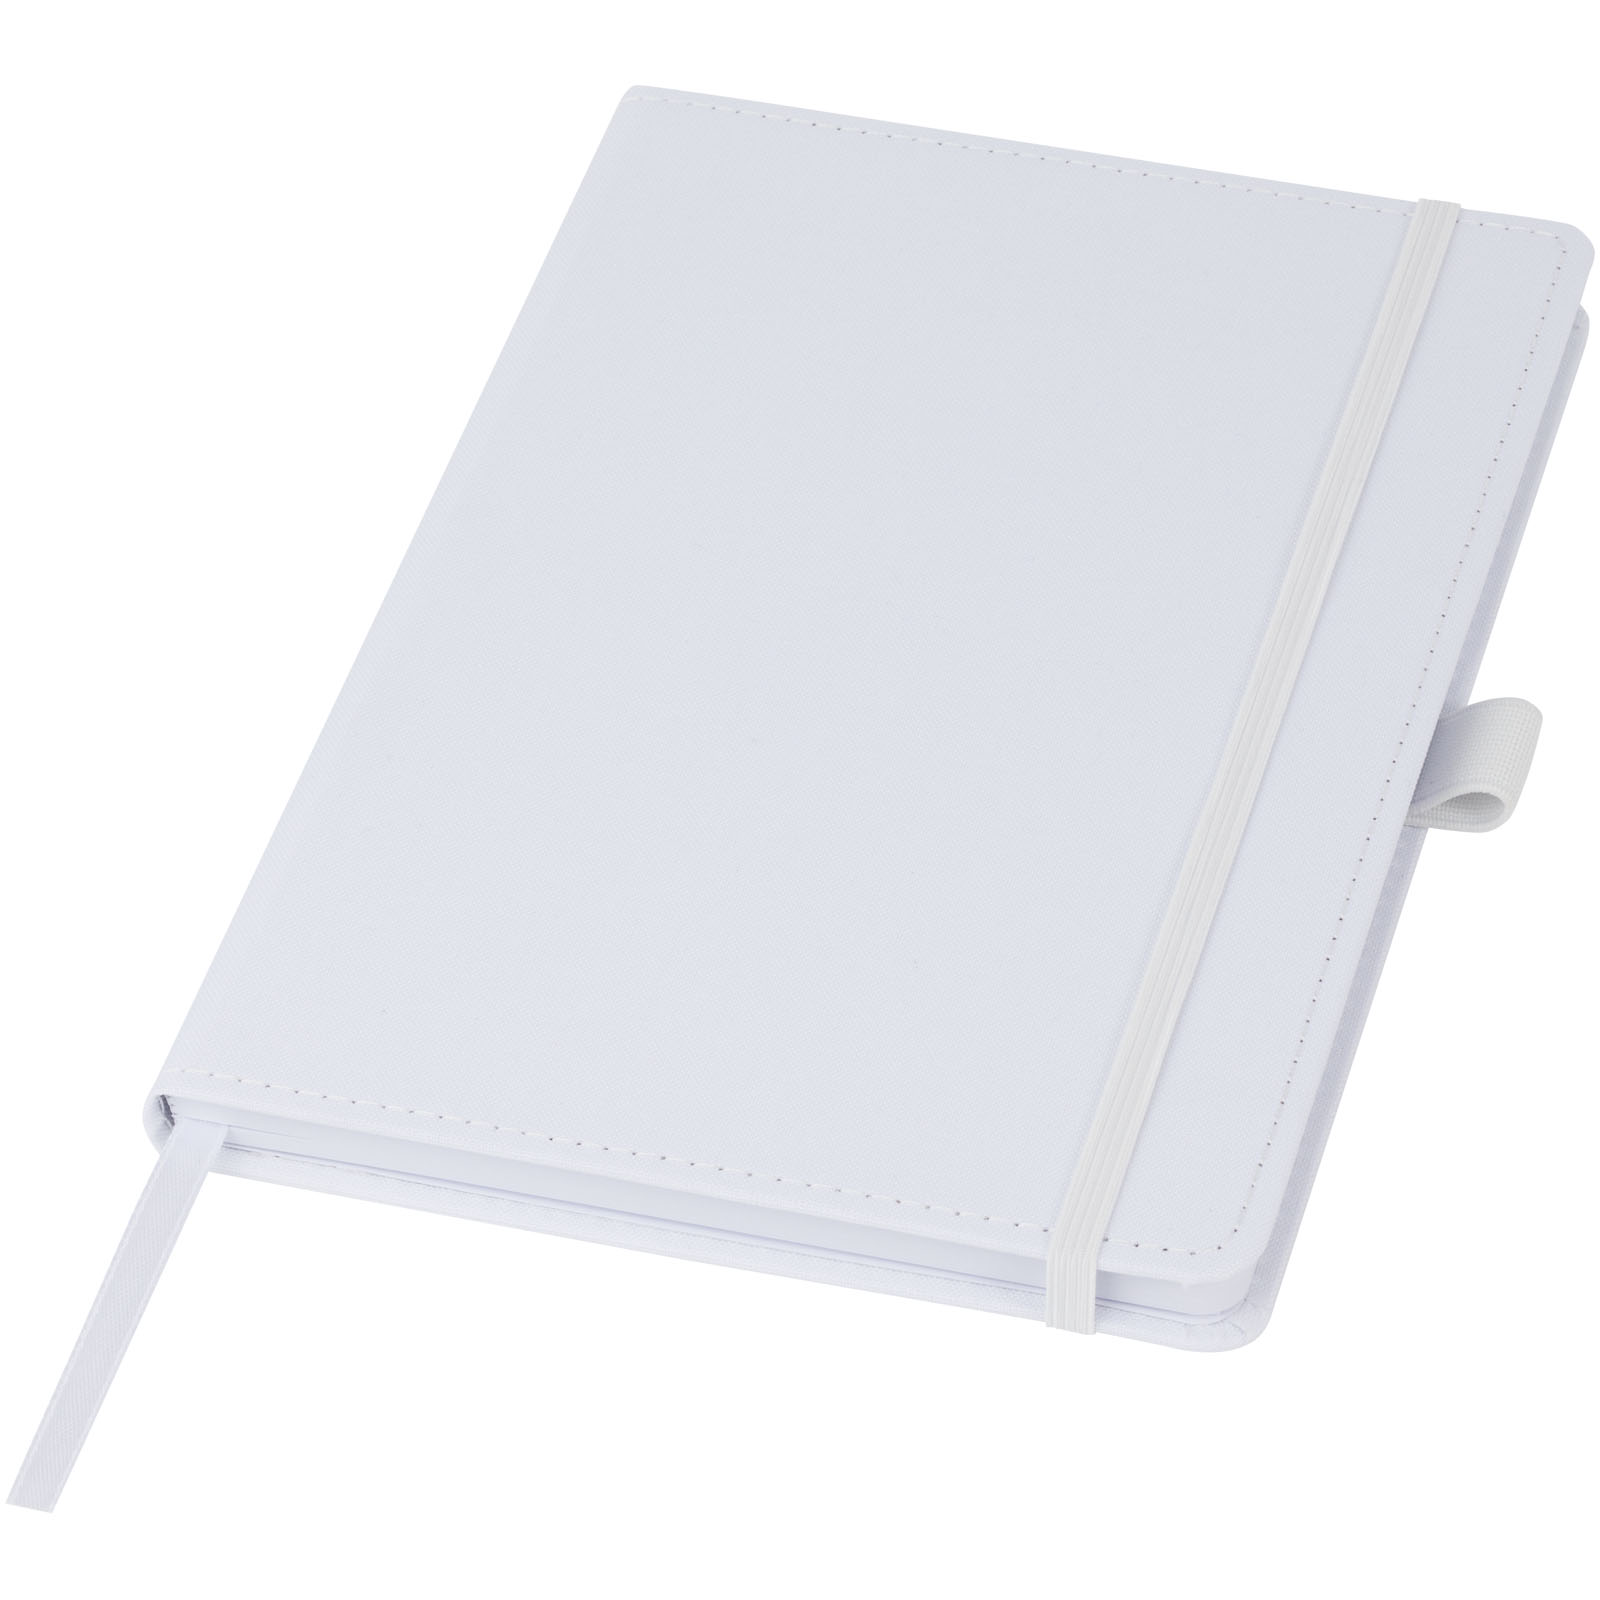 Advertising Hard cover notebooks - Thalaasa ocean-bound plastic hardcover notebook - 0